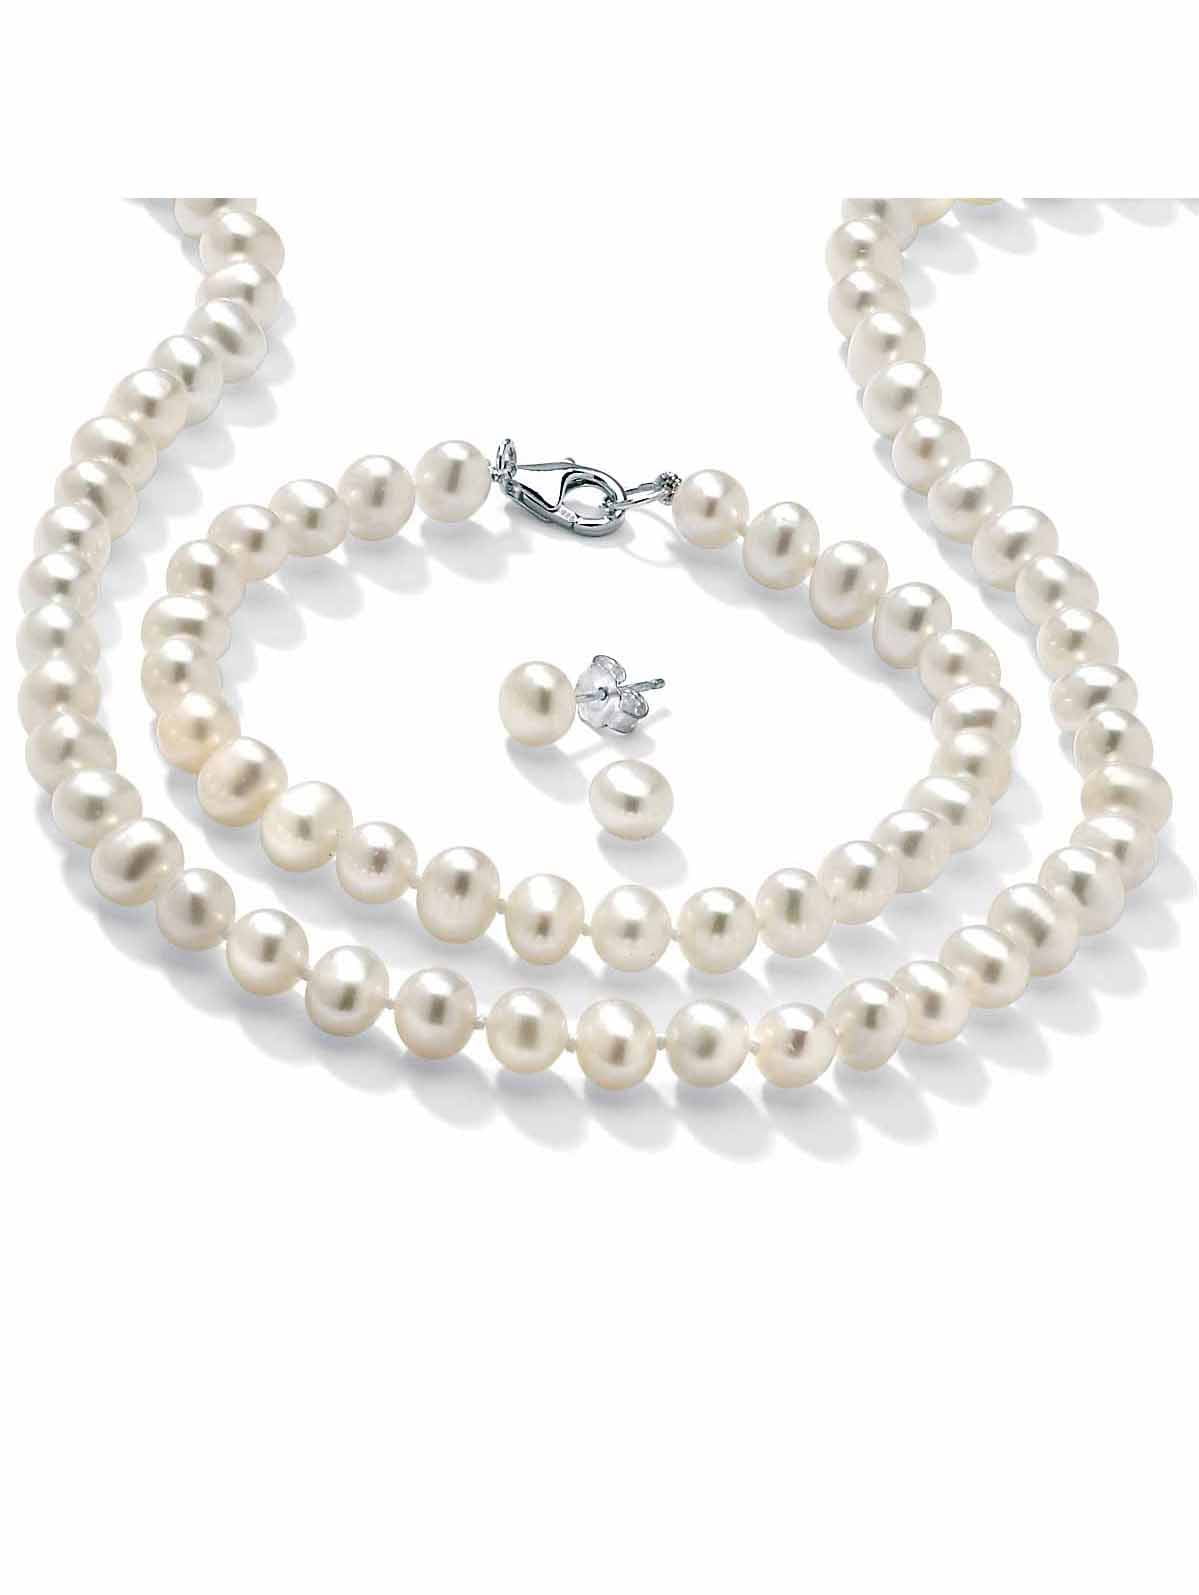 Pearl Crystal Rhinestone Bridal Necklace Bracelet Earrings Wedding Set